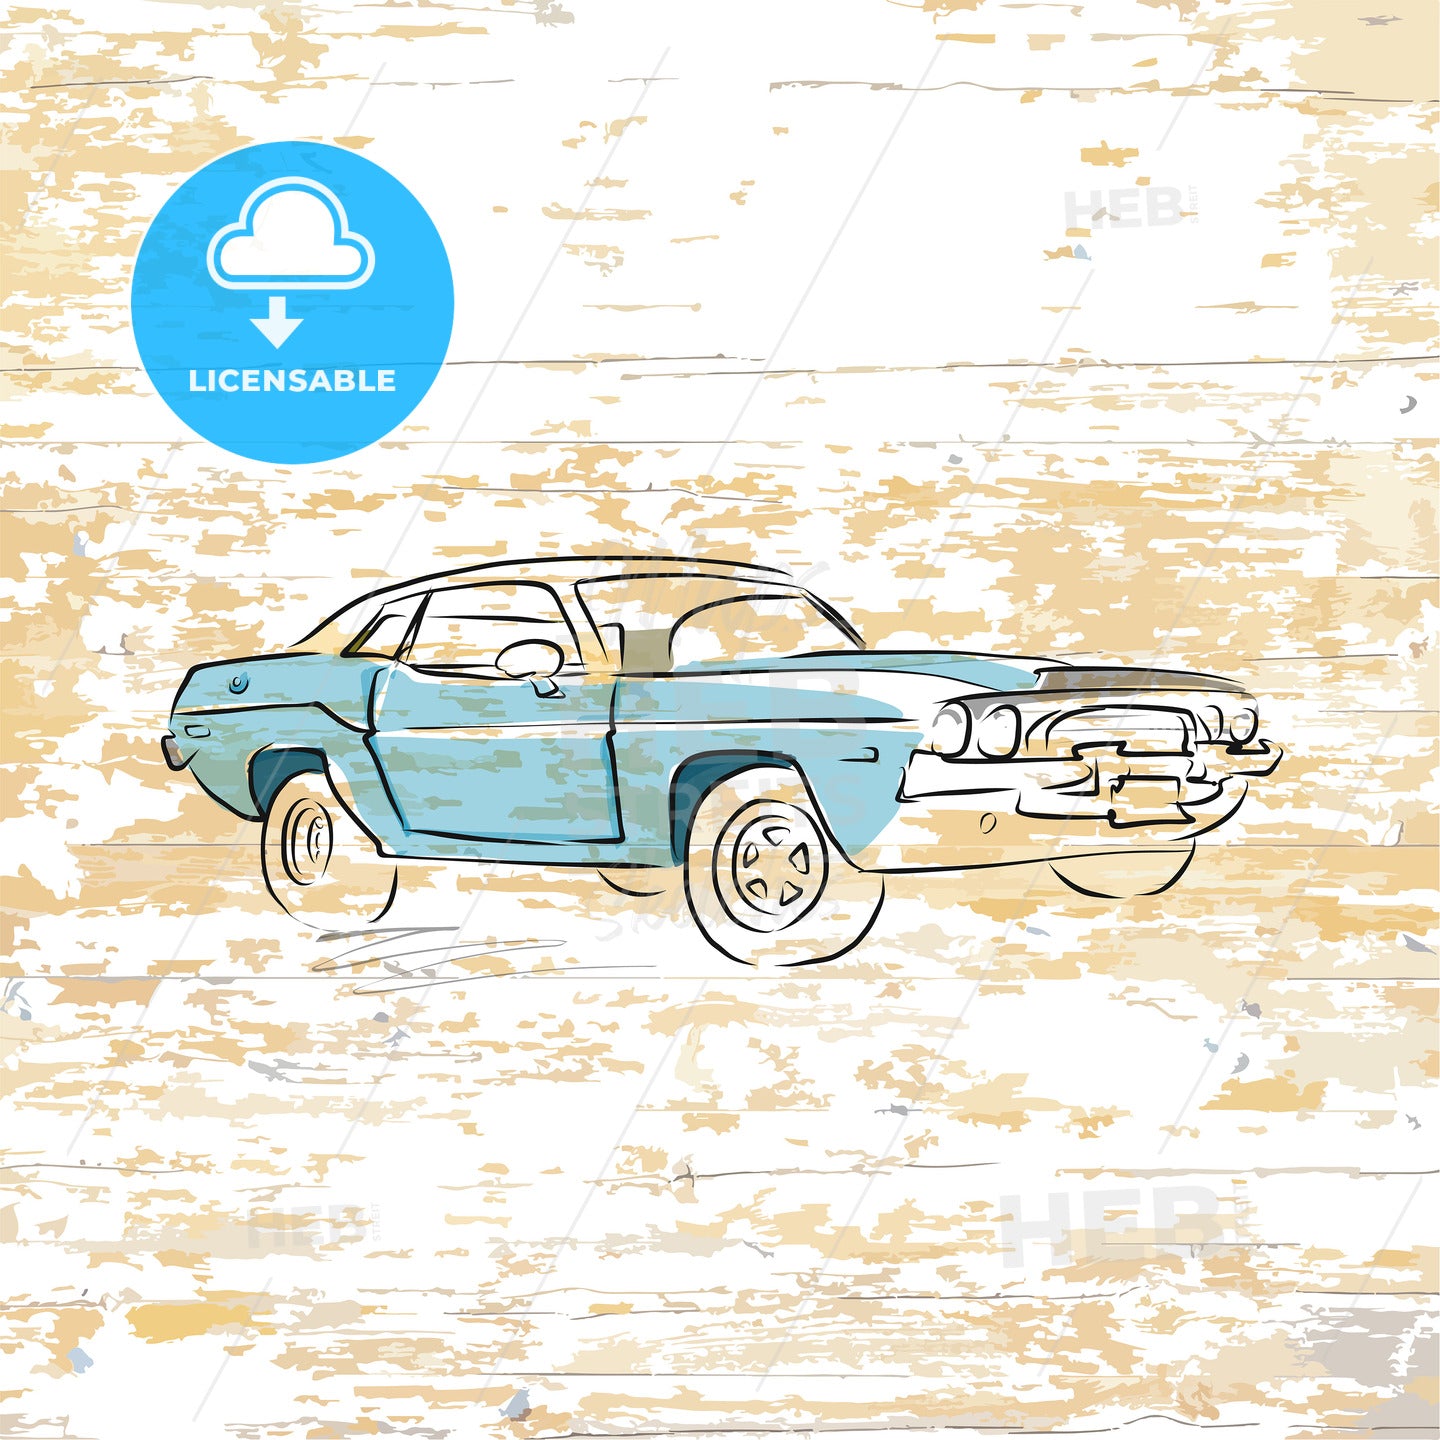 Vintage car drawing on wooden background – instant download